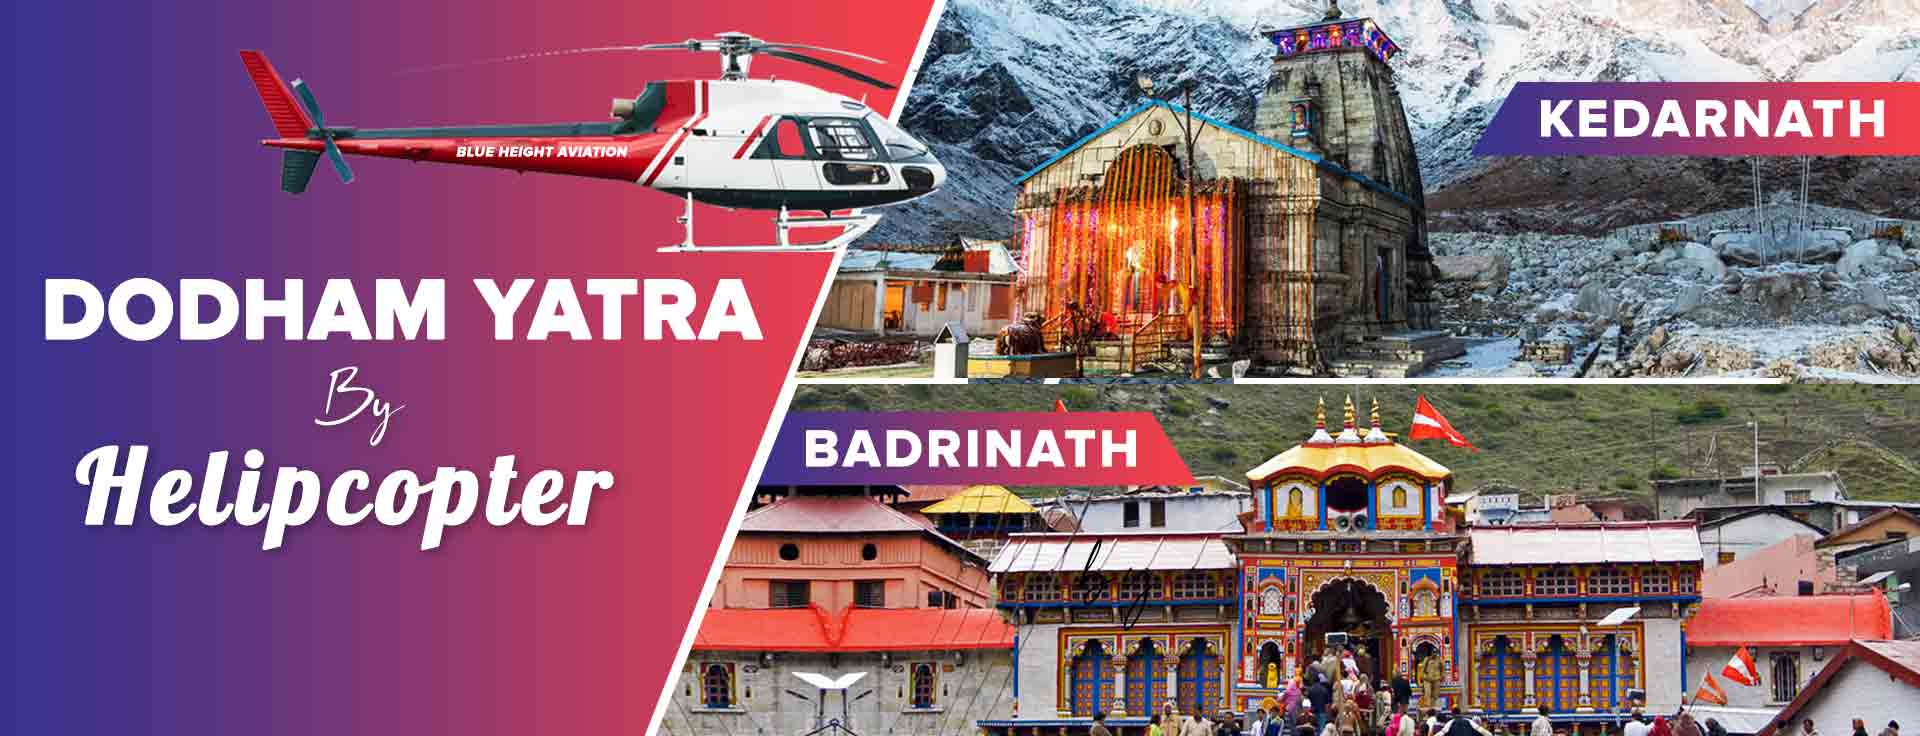 Badrinath Kedarnath Yatra By Helicopter